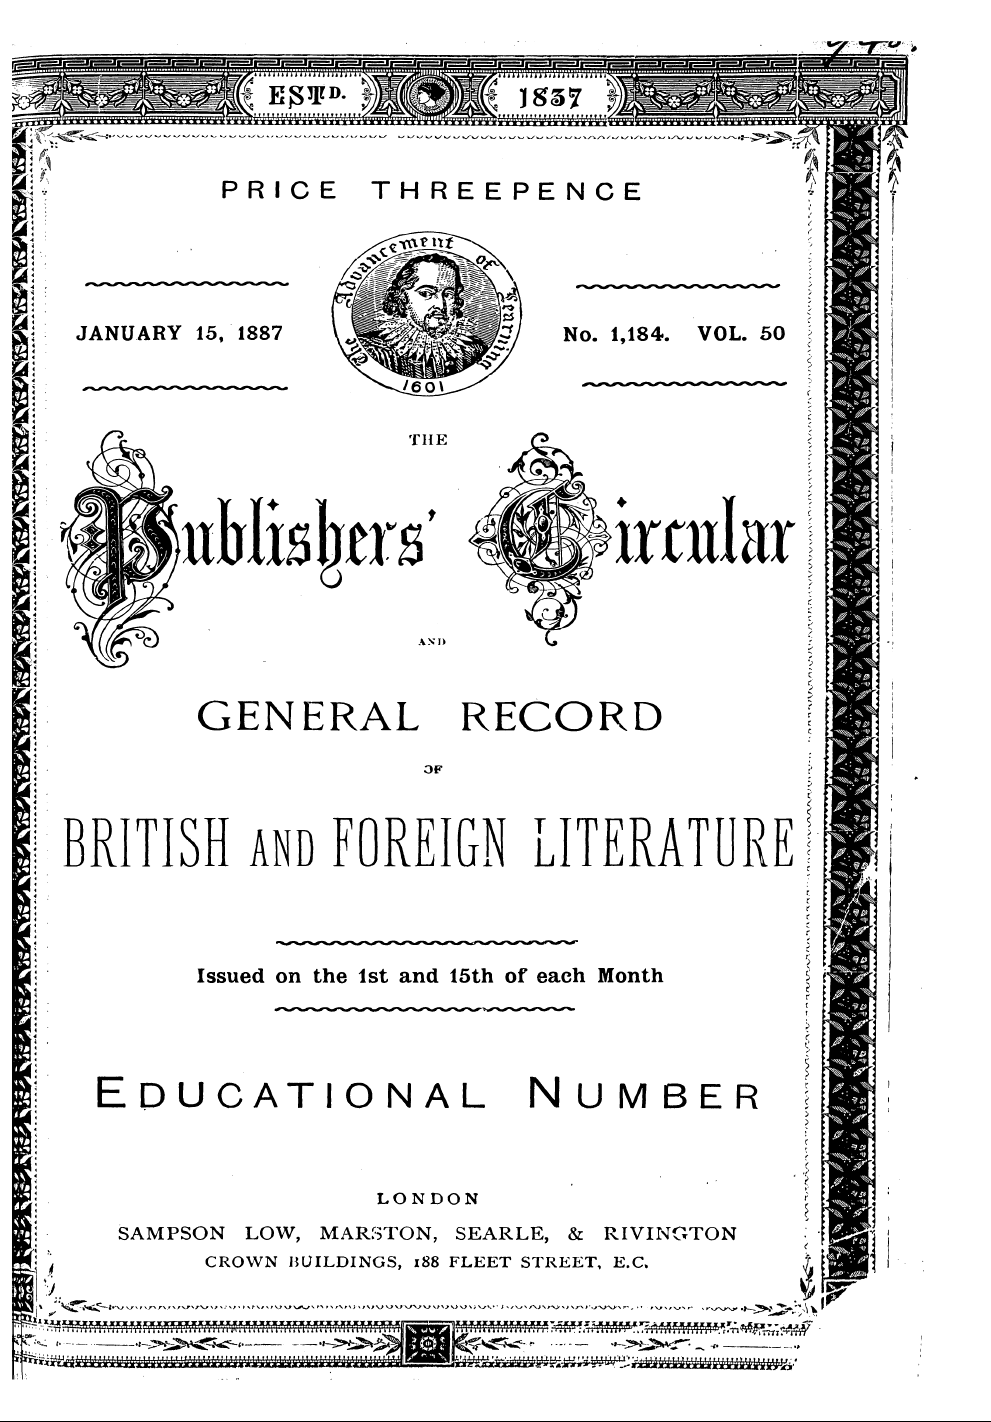 Publishers’ Circular (1880-1890): jS F Y, 1st edition: 1